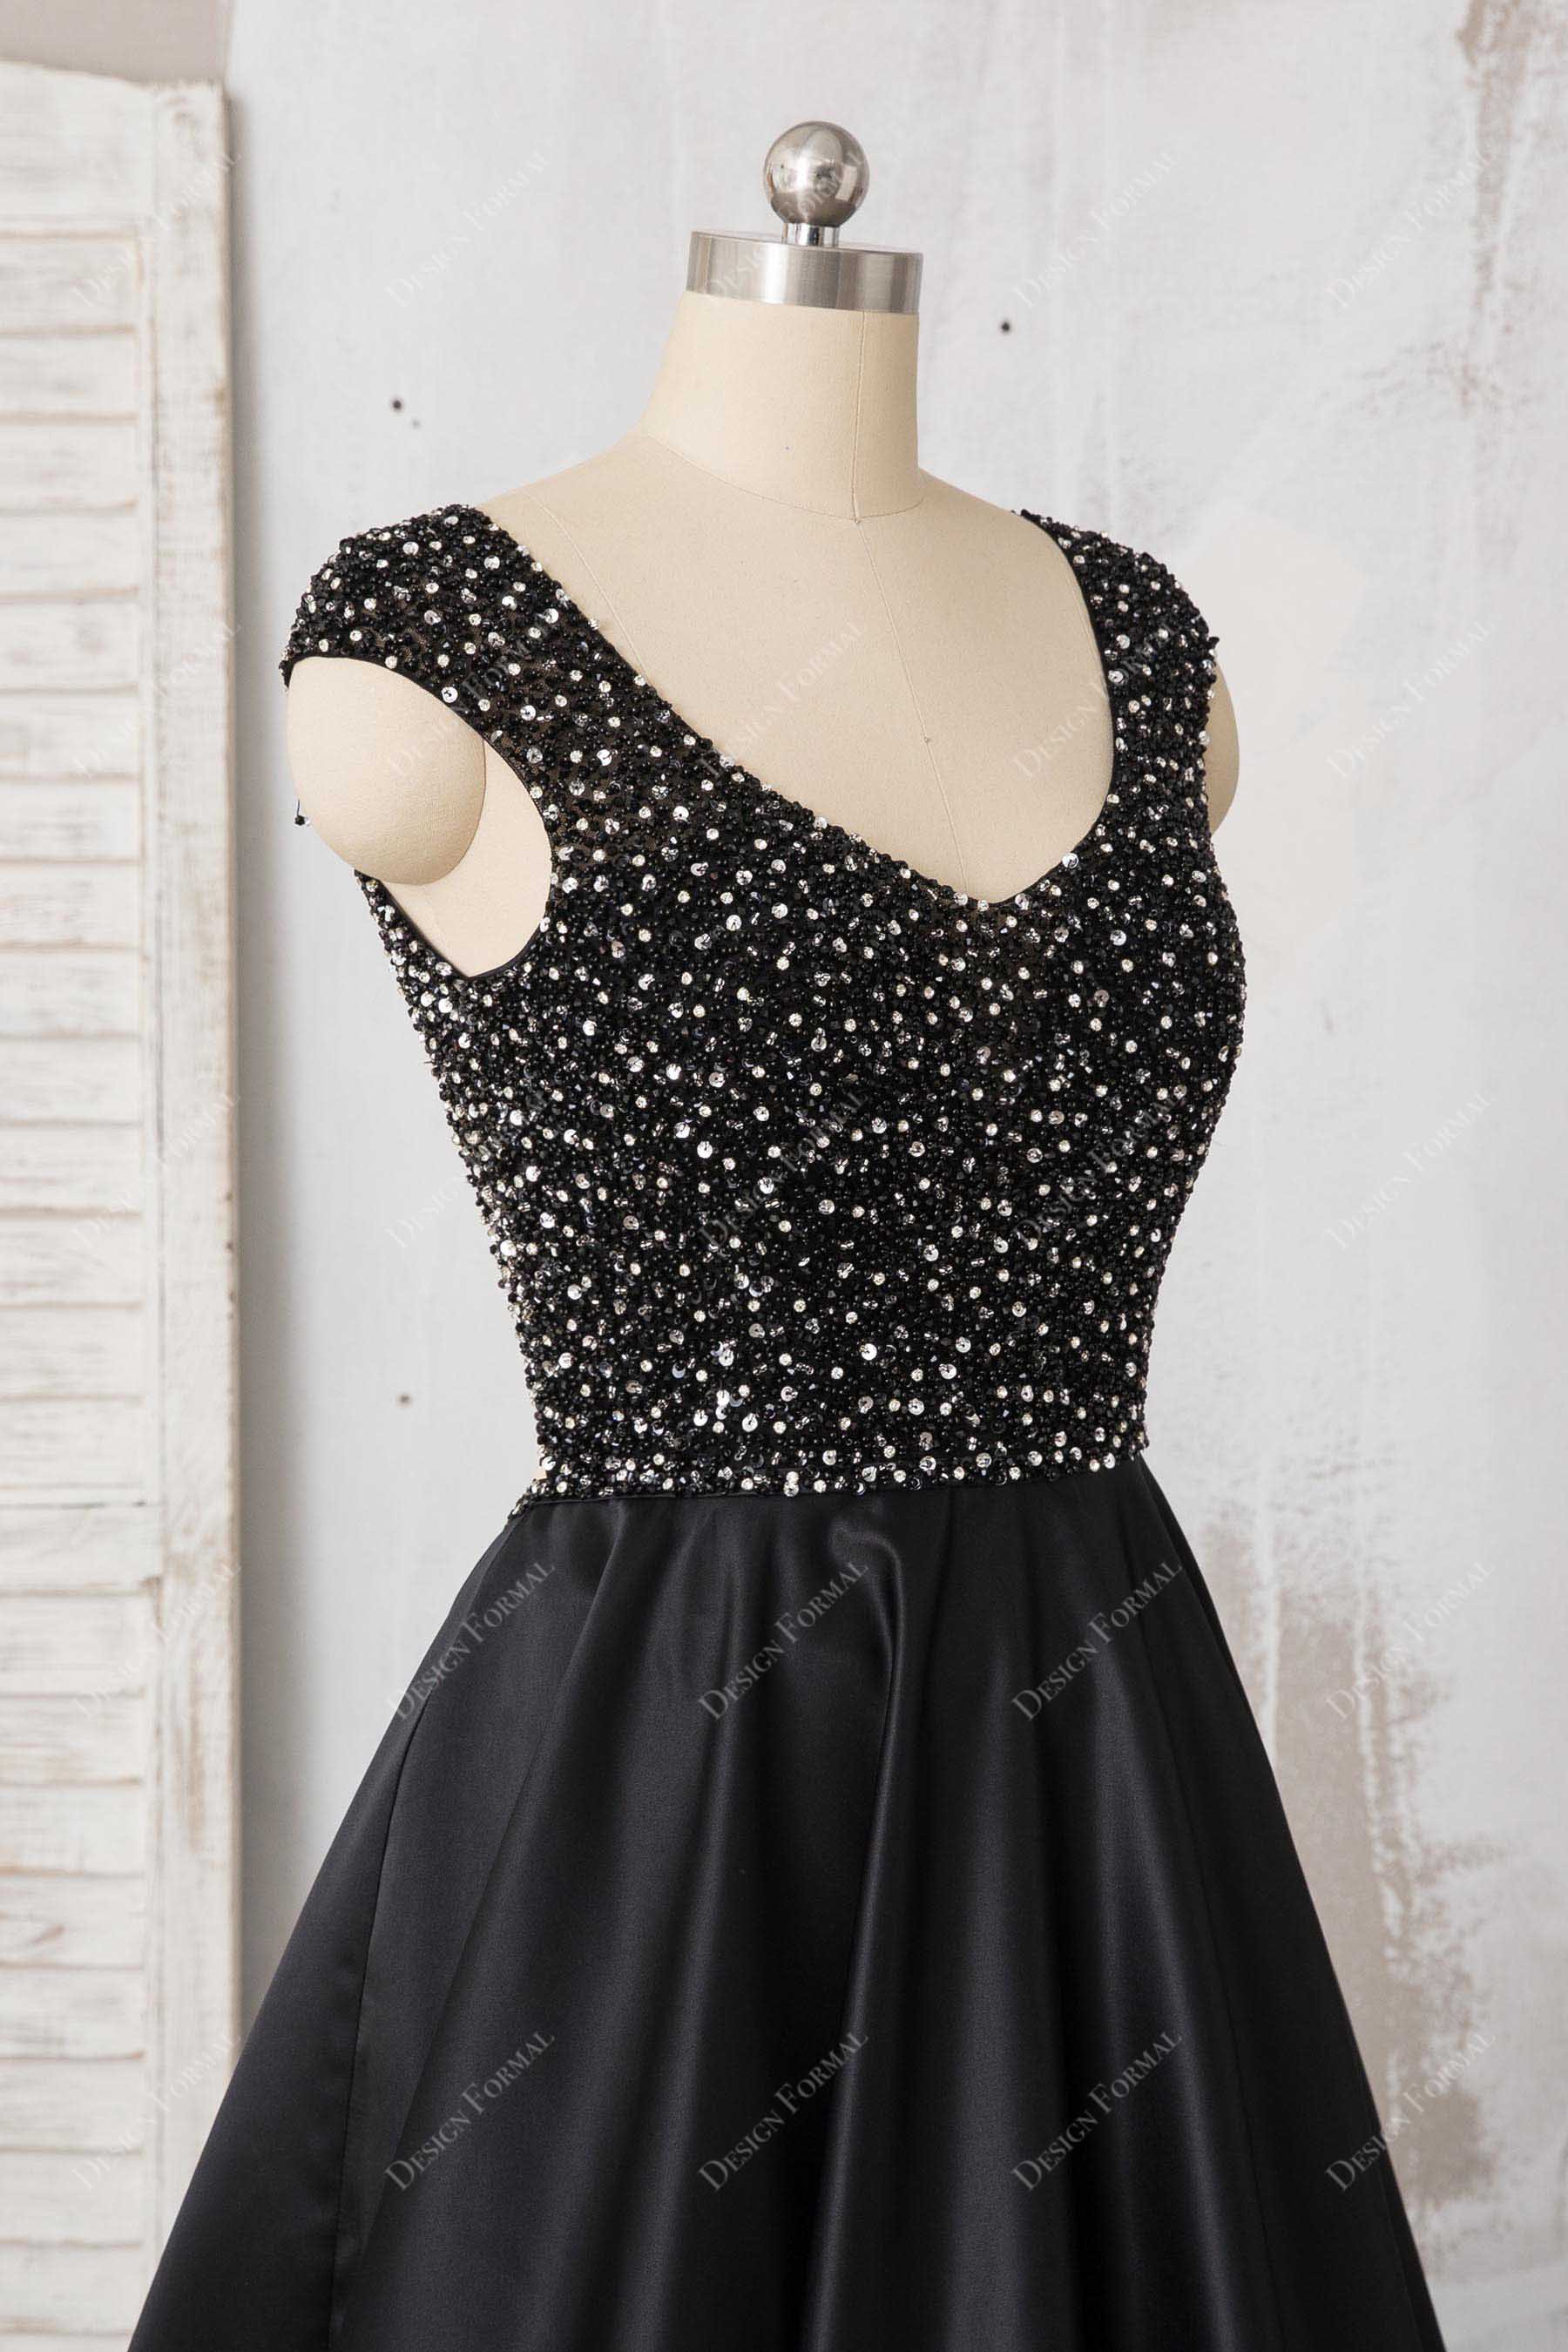 sheer cap sleeve black beaded prom dress